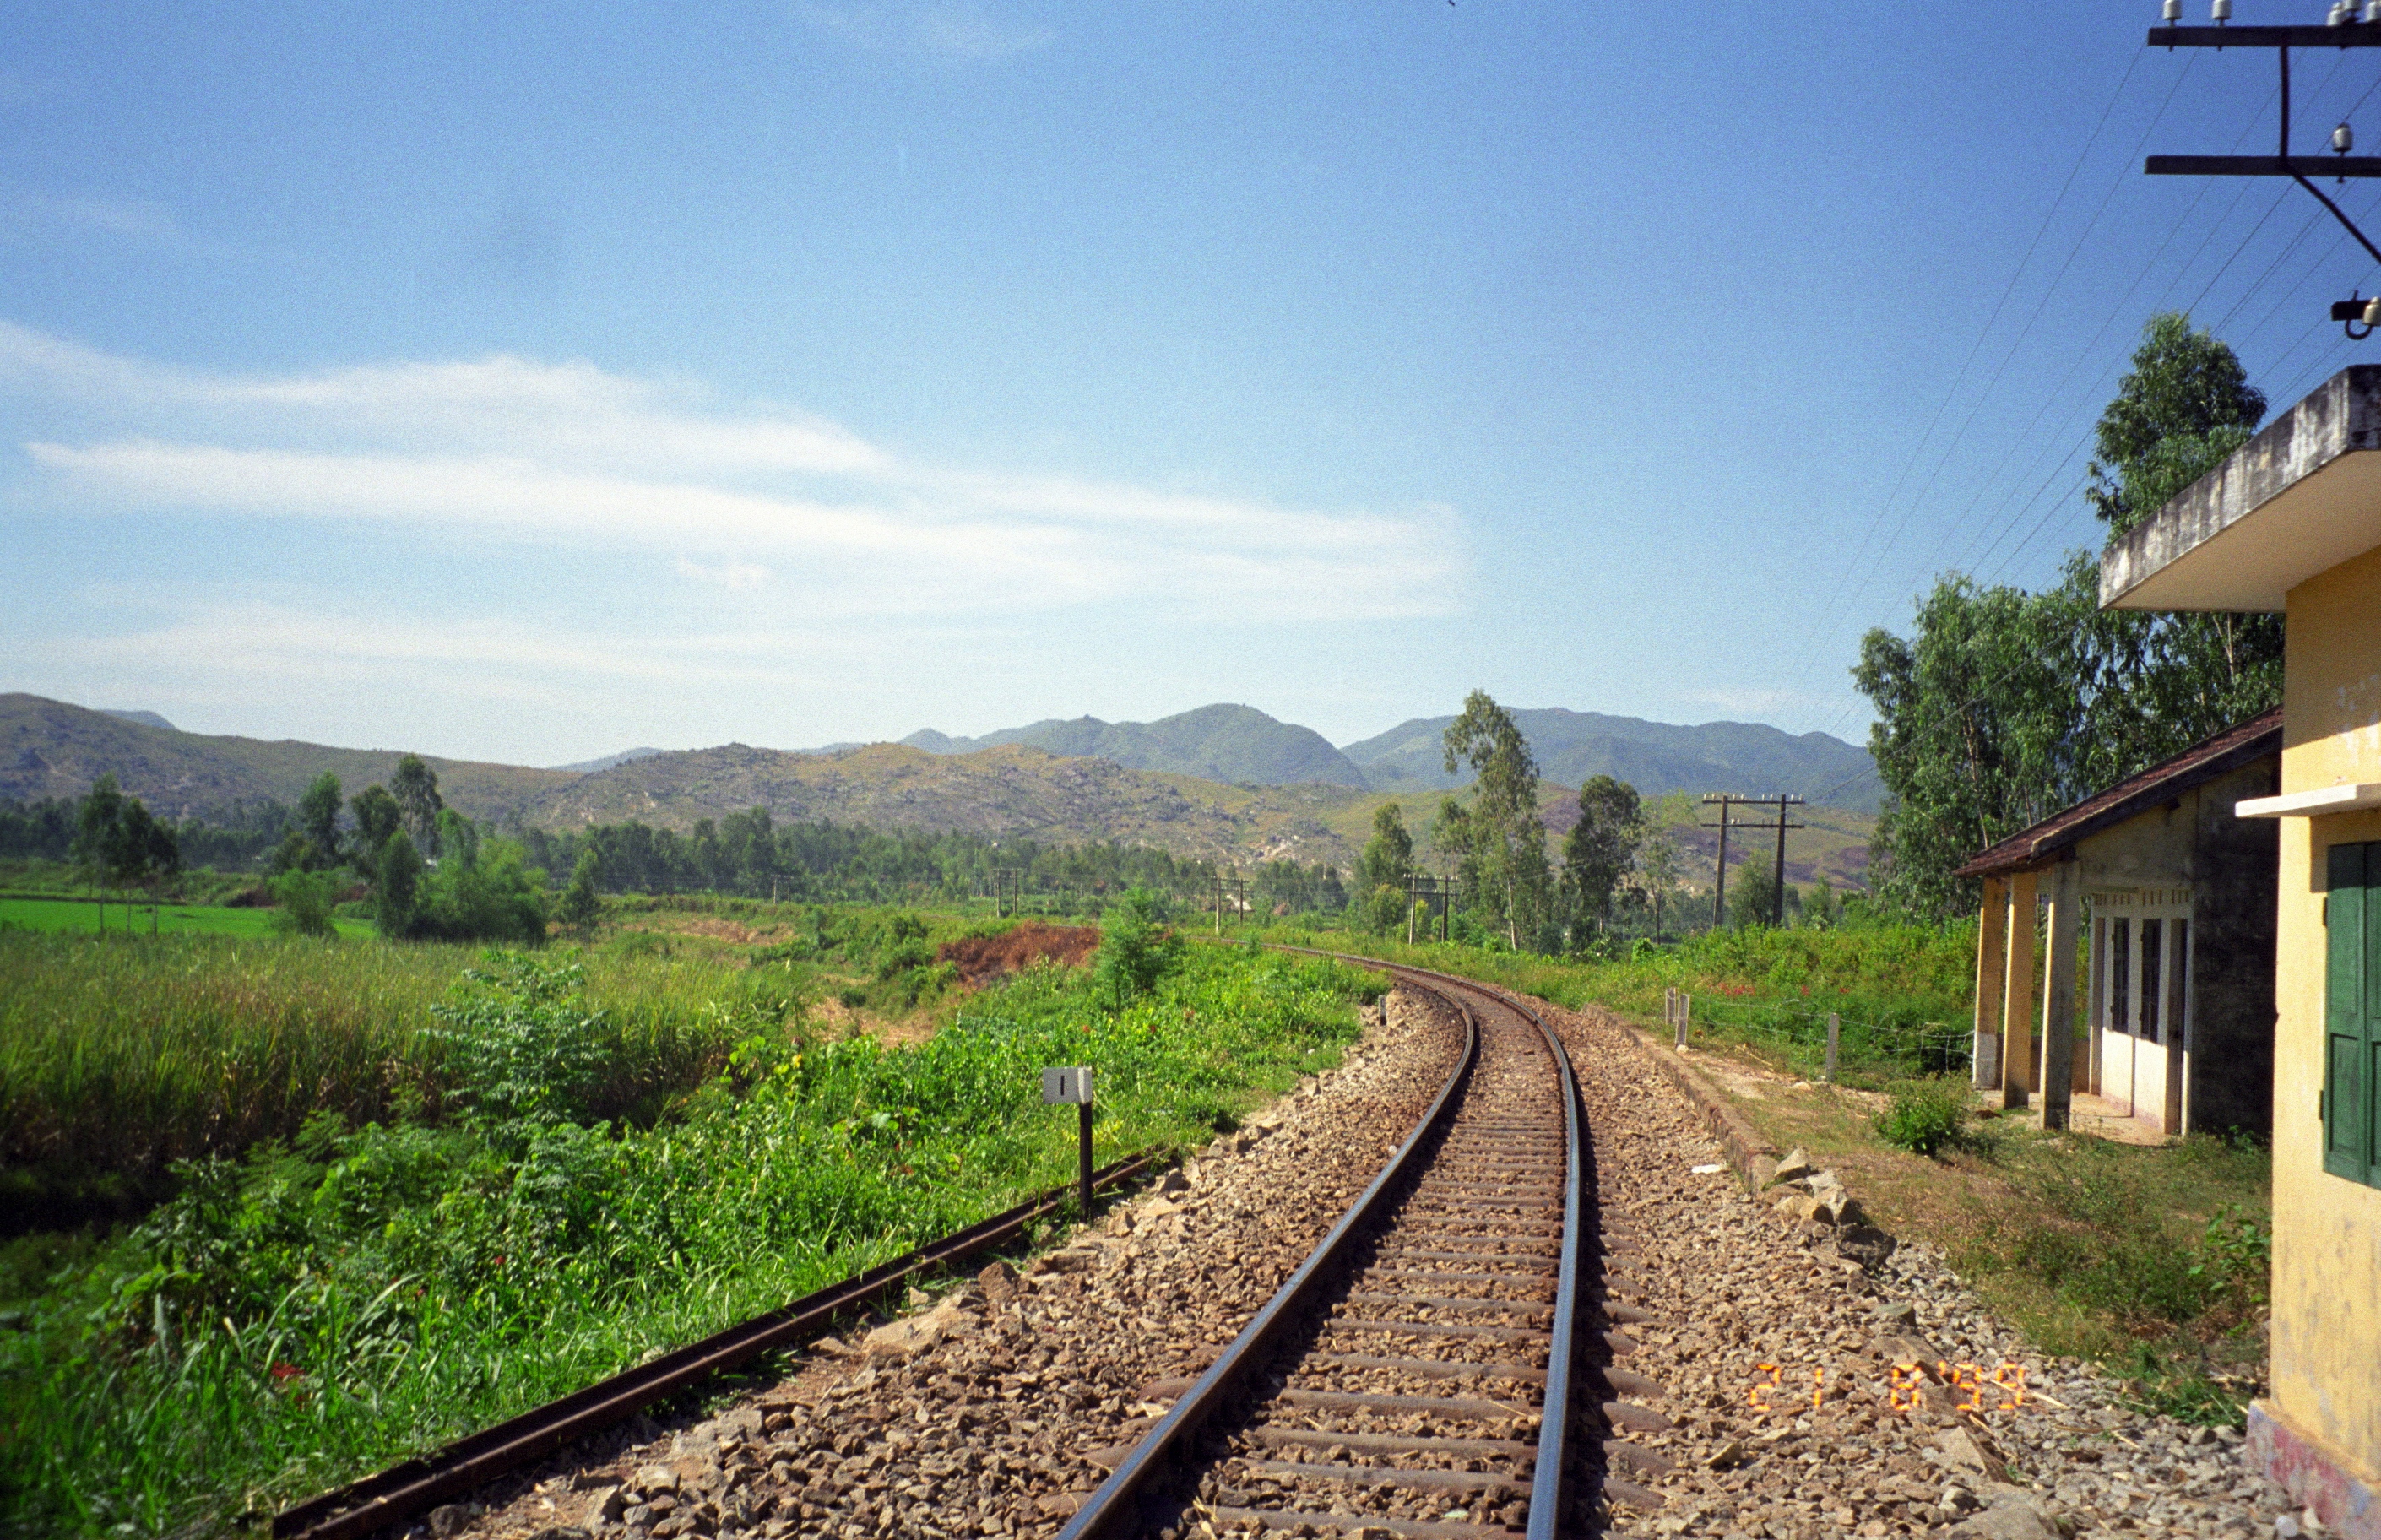 File:My Son railway tracks.jpg - Wikimedia Commons